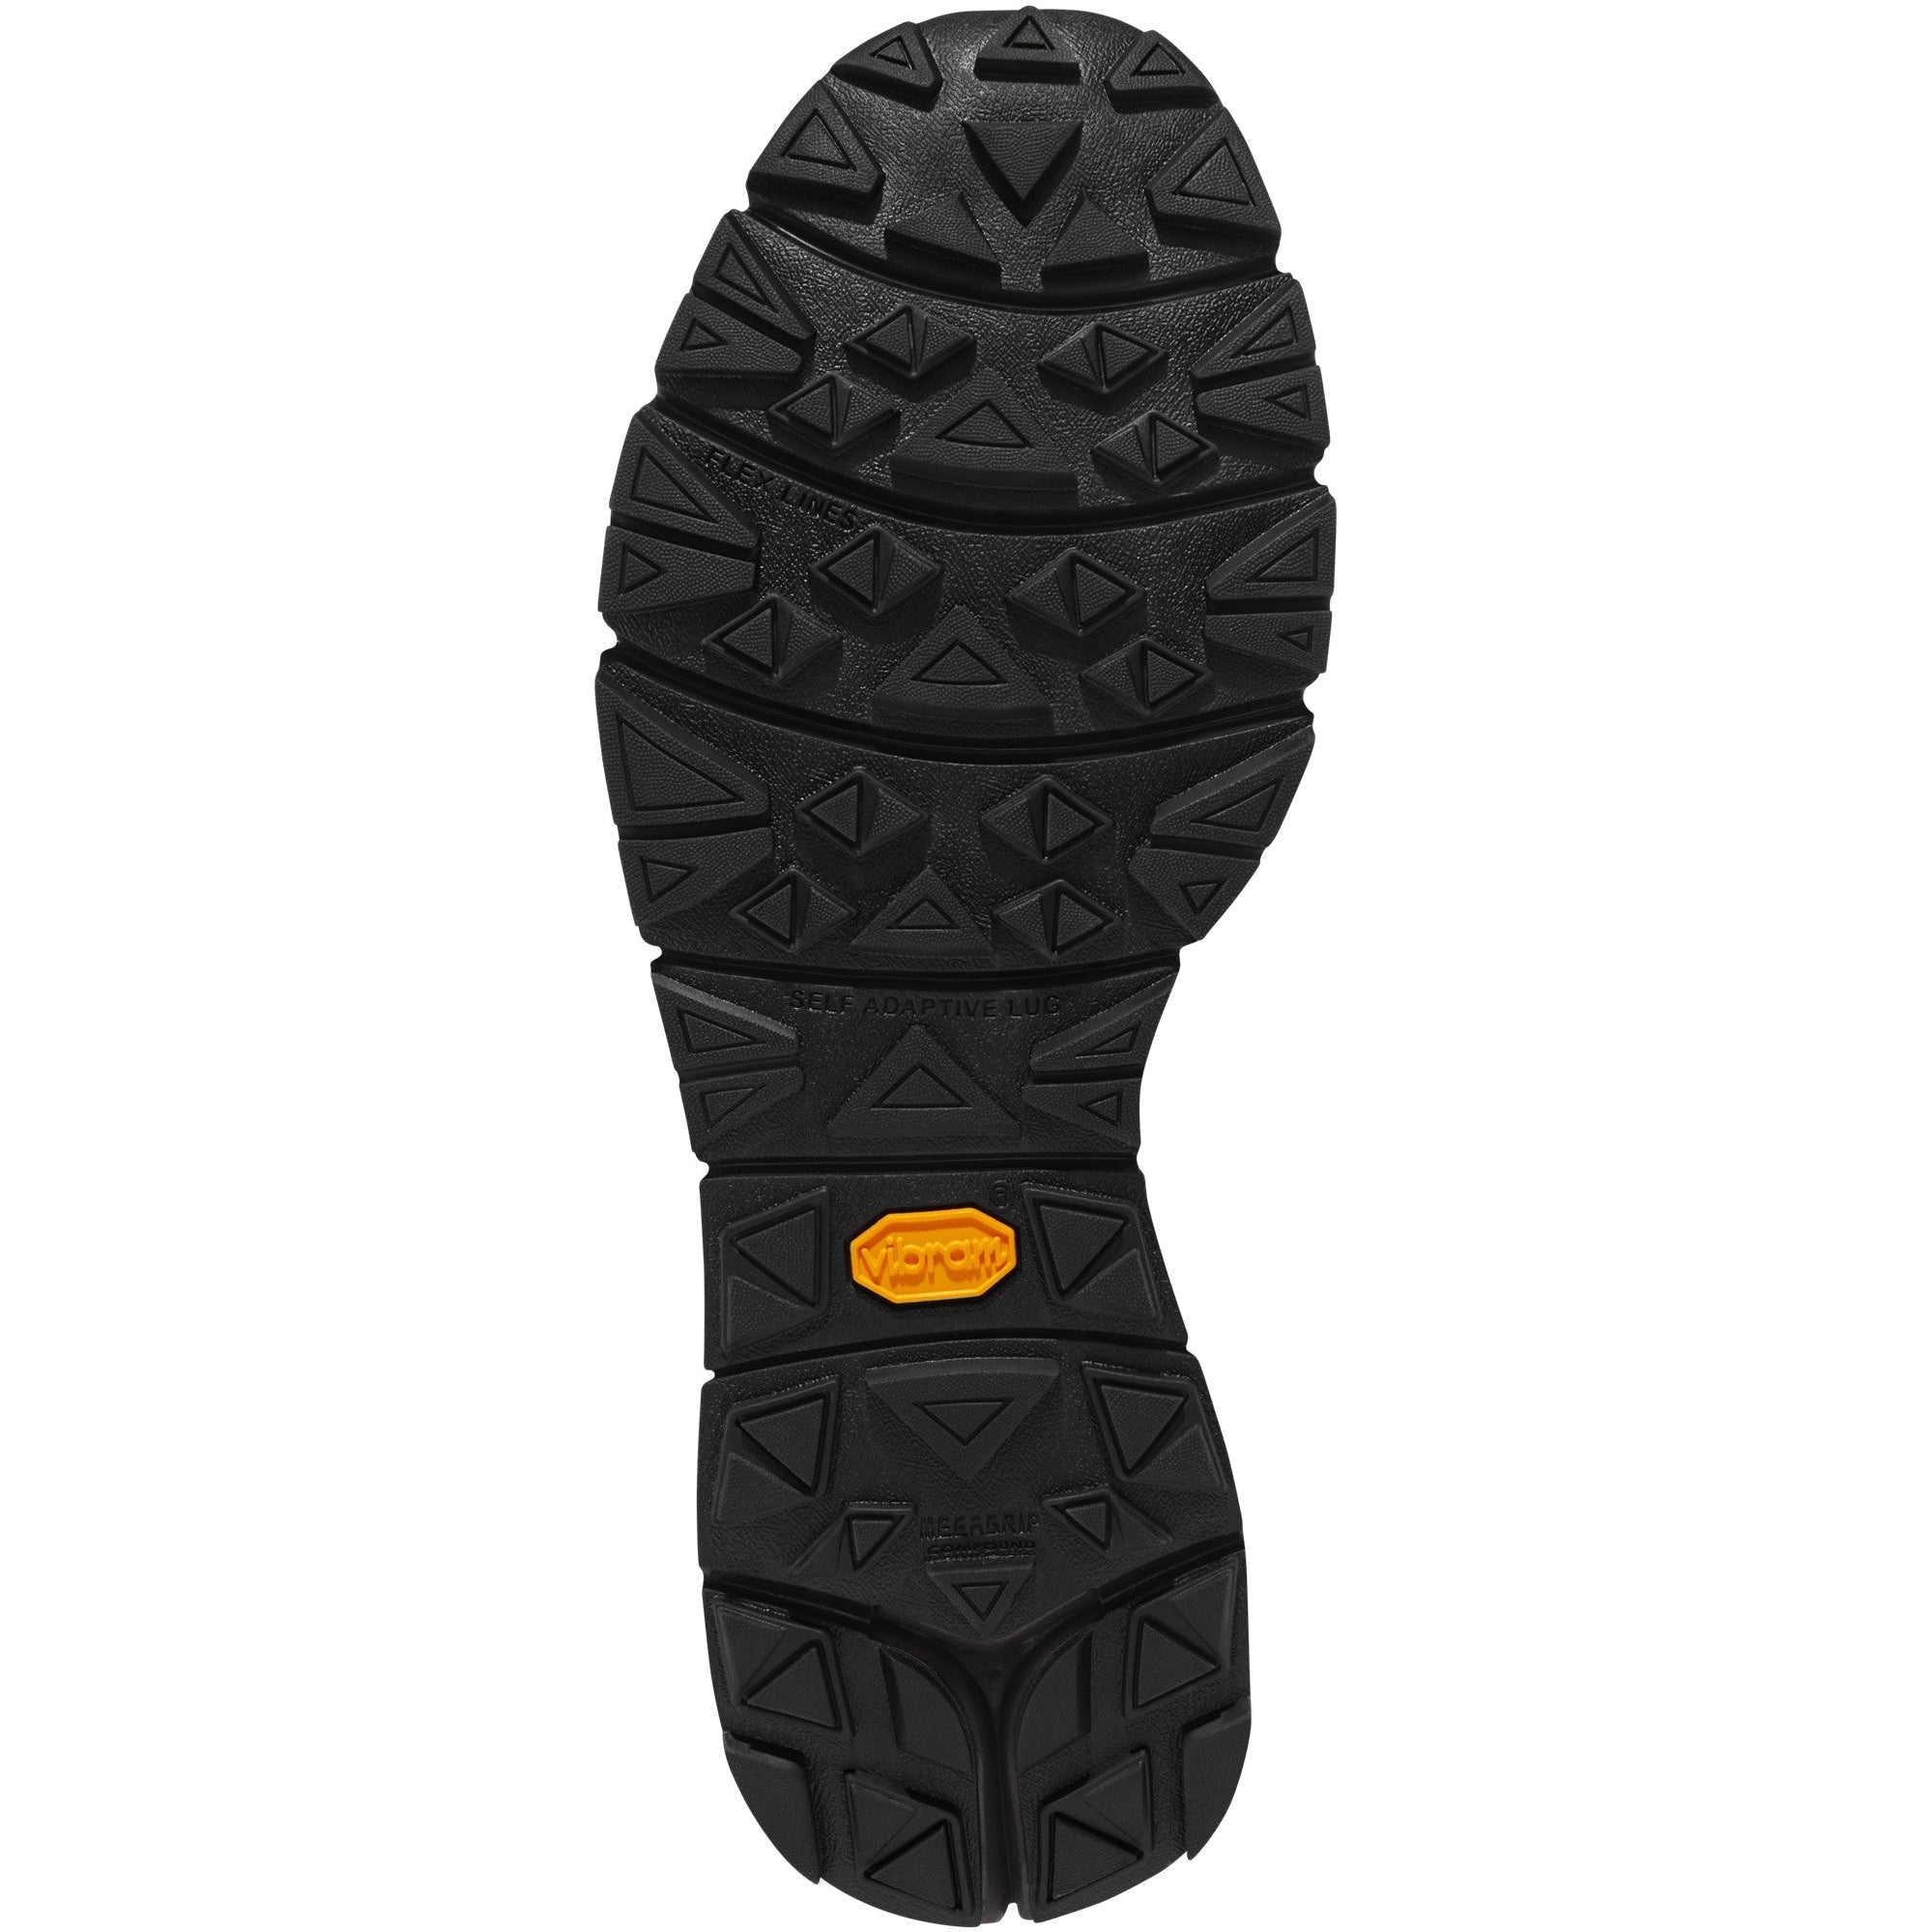 Danner Men's Mountain 600 4.5" WP Hiking Boot- Java/Bossa Nova - 36233  - Overlook Boots